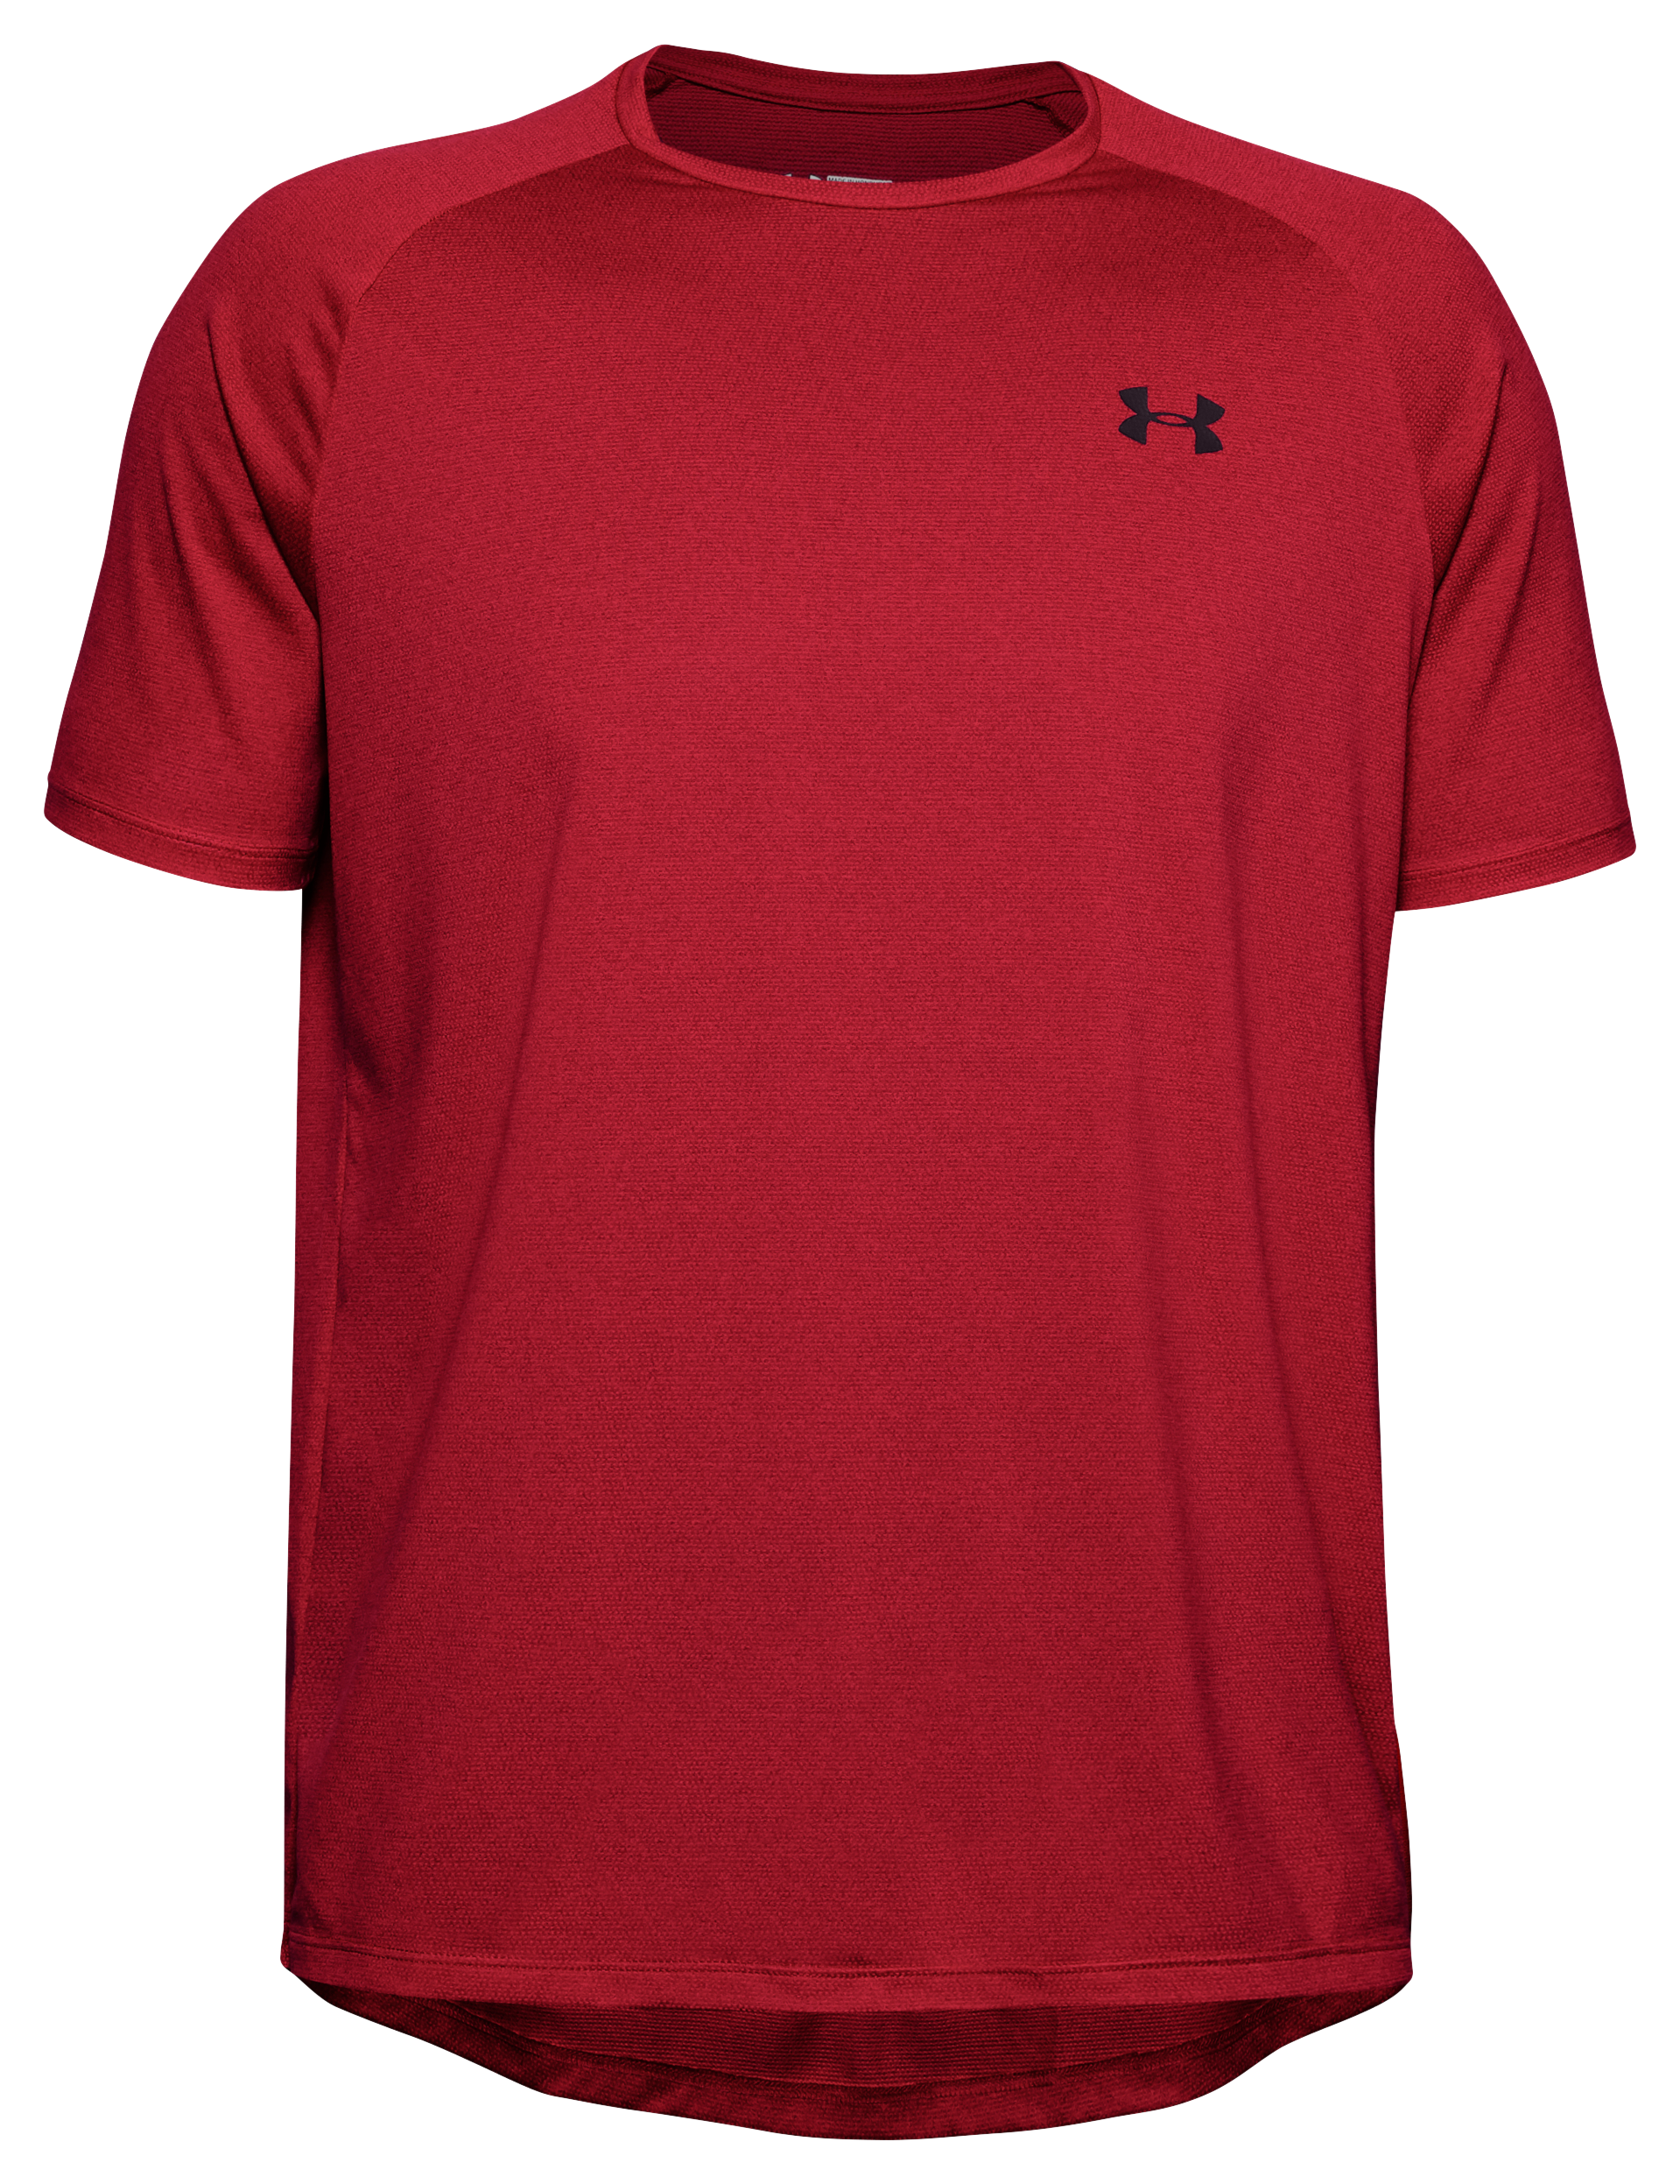 Under Armour UA Tech 2.0 Short-Sleeve T-Shirt for Men - Red/Black - 4XLT